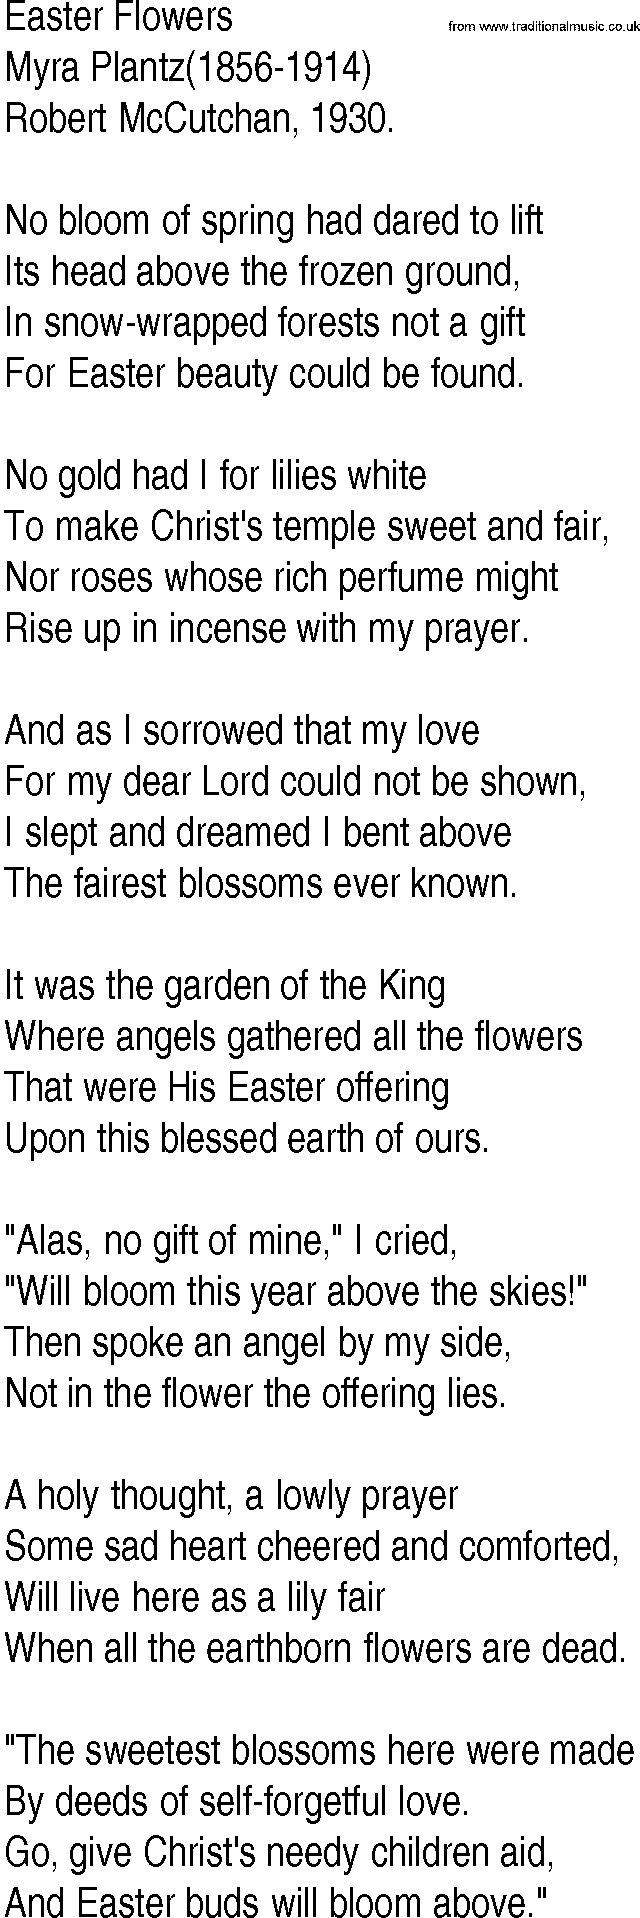 Hymn and Gospel Song: Easter Flowers by Myra Plantz lyrics